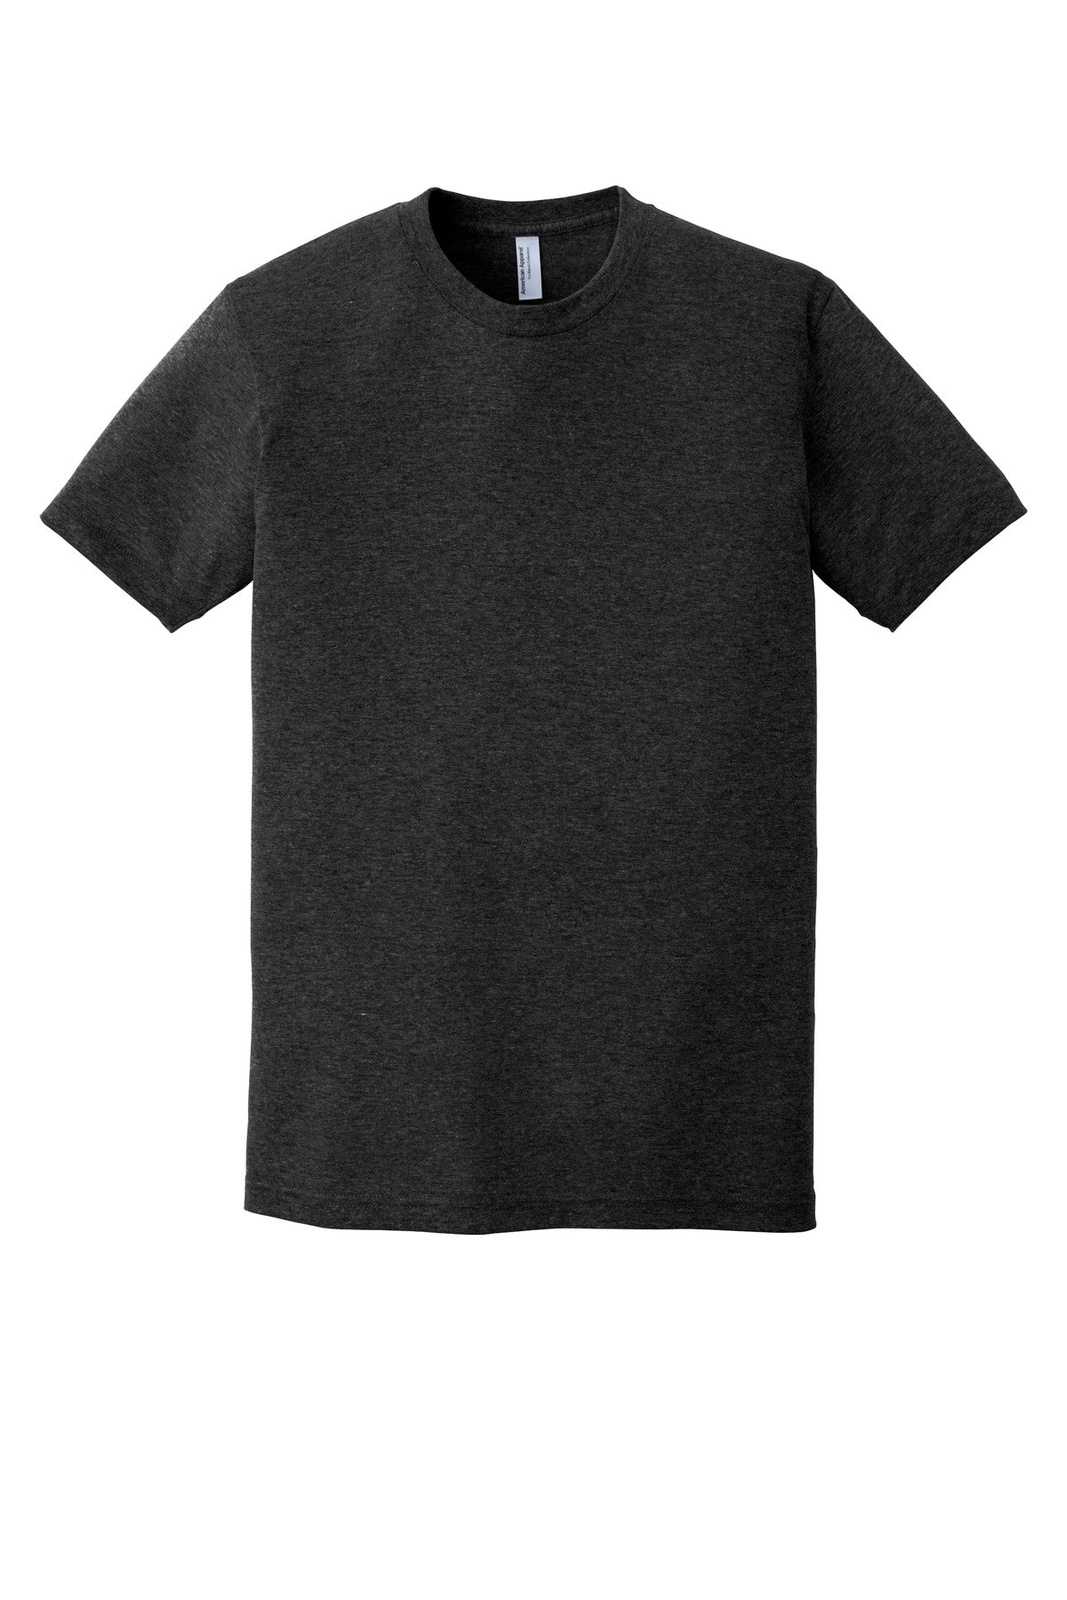 American Apparel TR401W Tri-Blend Short Sleeve Track T-Shirt - Tri Black - HIT a Double